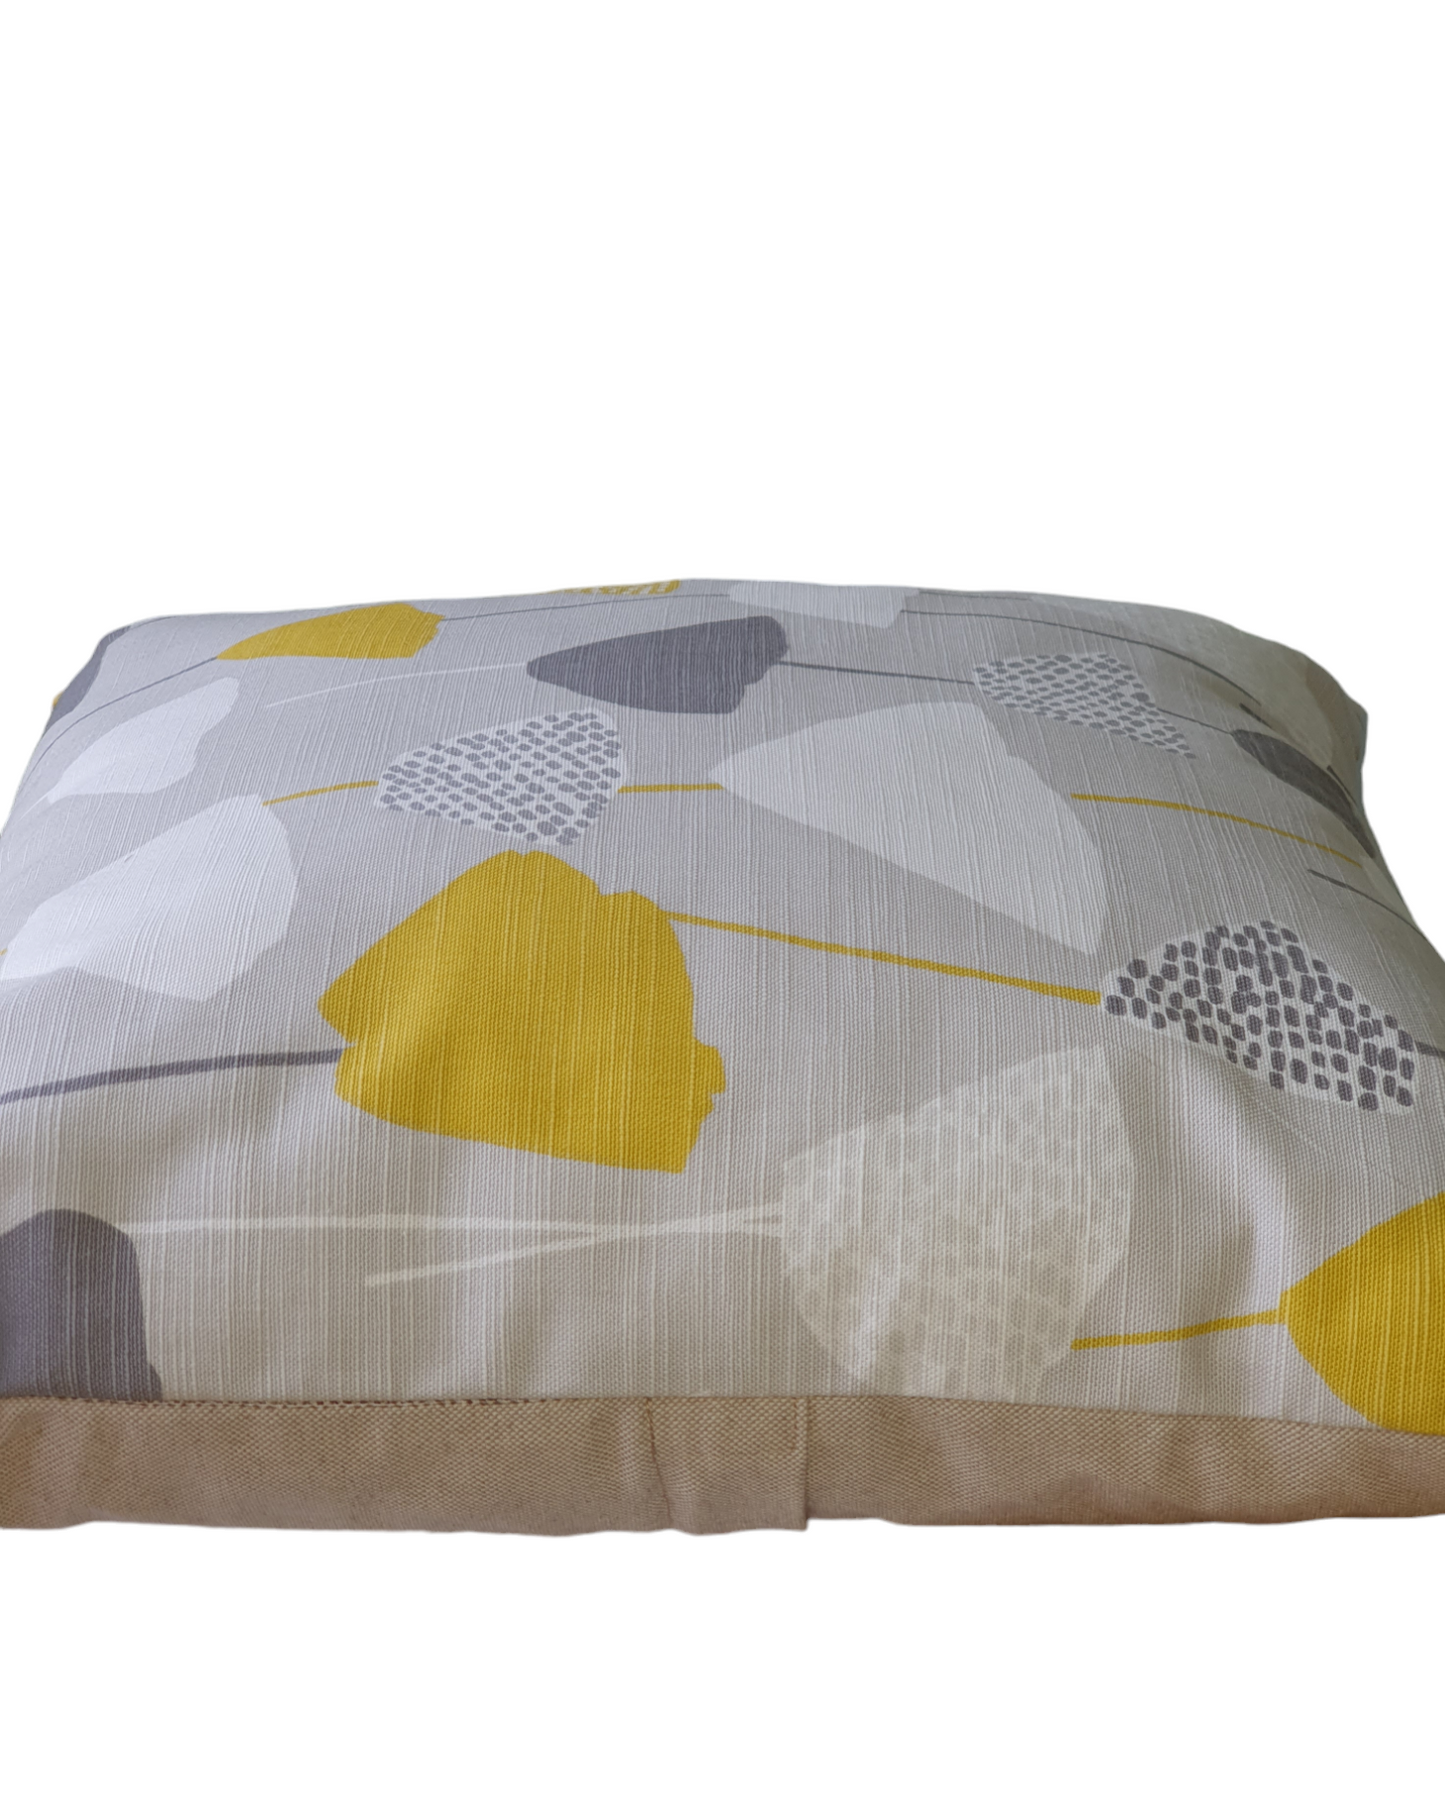 Handmade Cushion Cover - Abstract Tulips Fabric